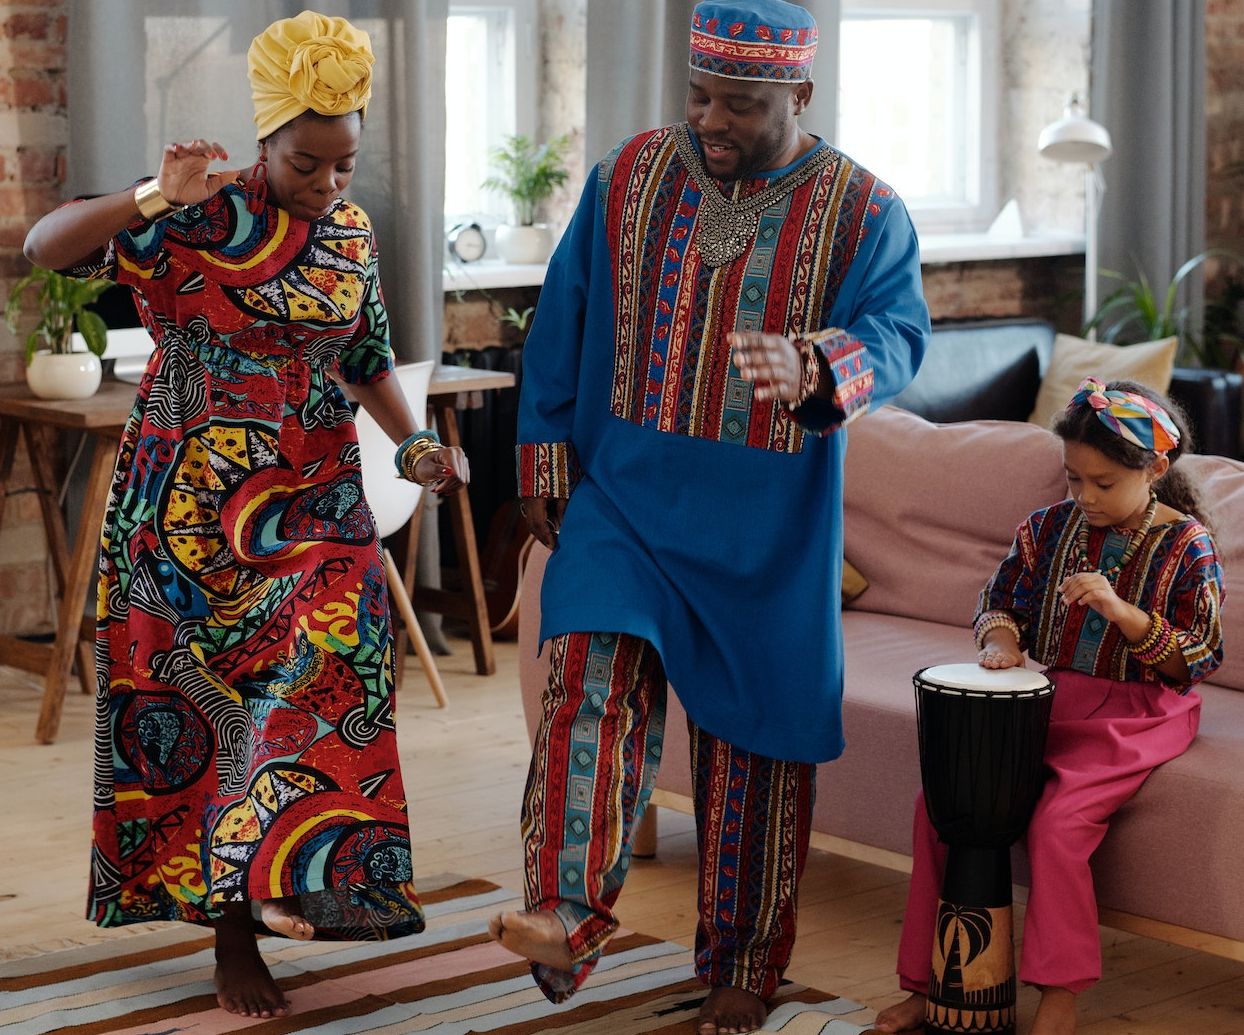 Keluarga African sedang bermain alat musik dan menari bersama.